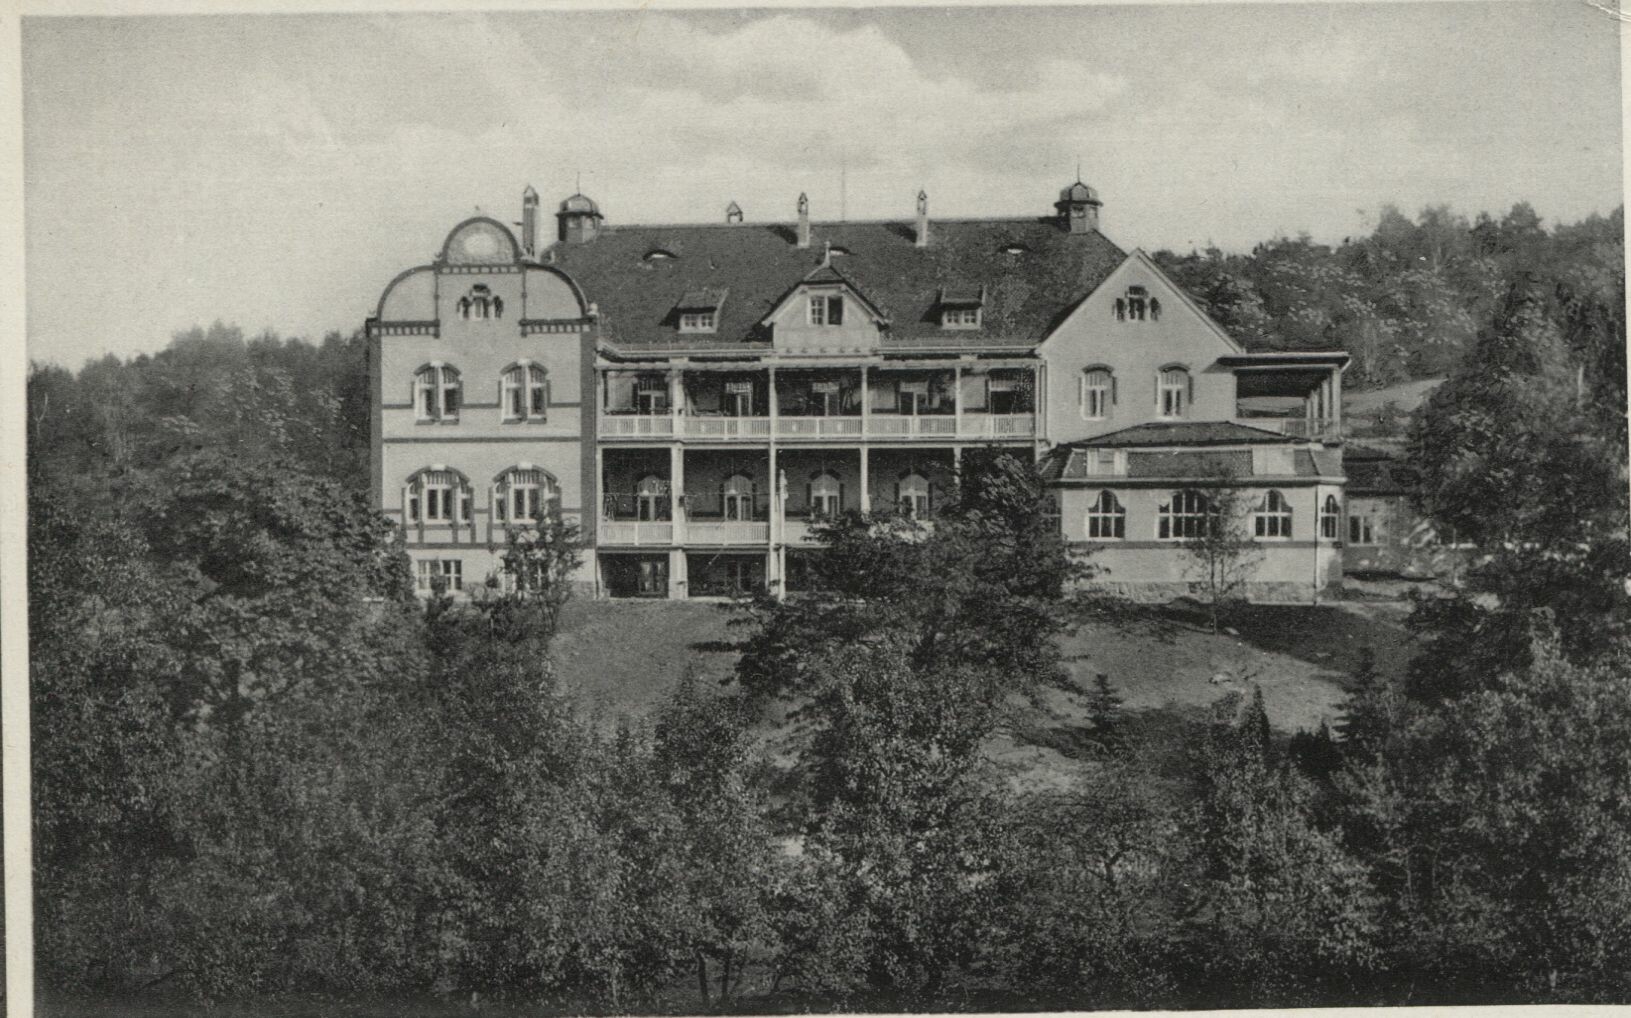 Postkarte: Coswig - Lindenhof - Fachkrankenhaus (Karrasburg Museum Coswig CC BY-NC-SA)